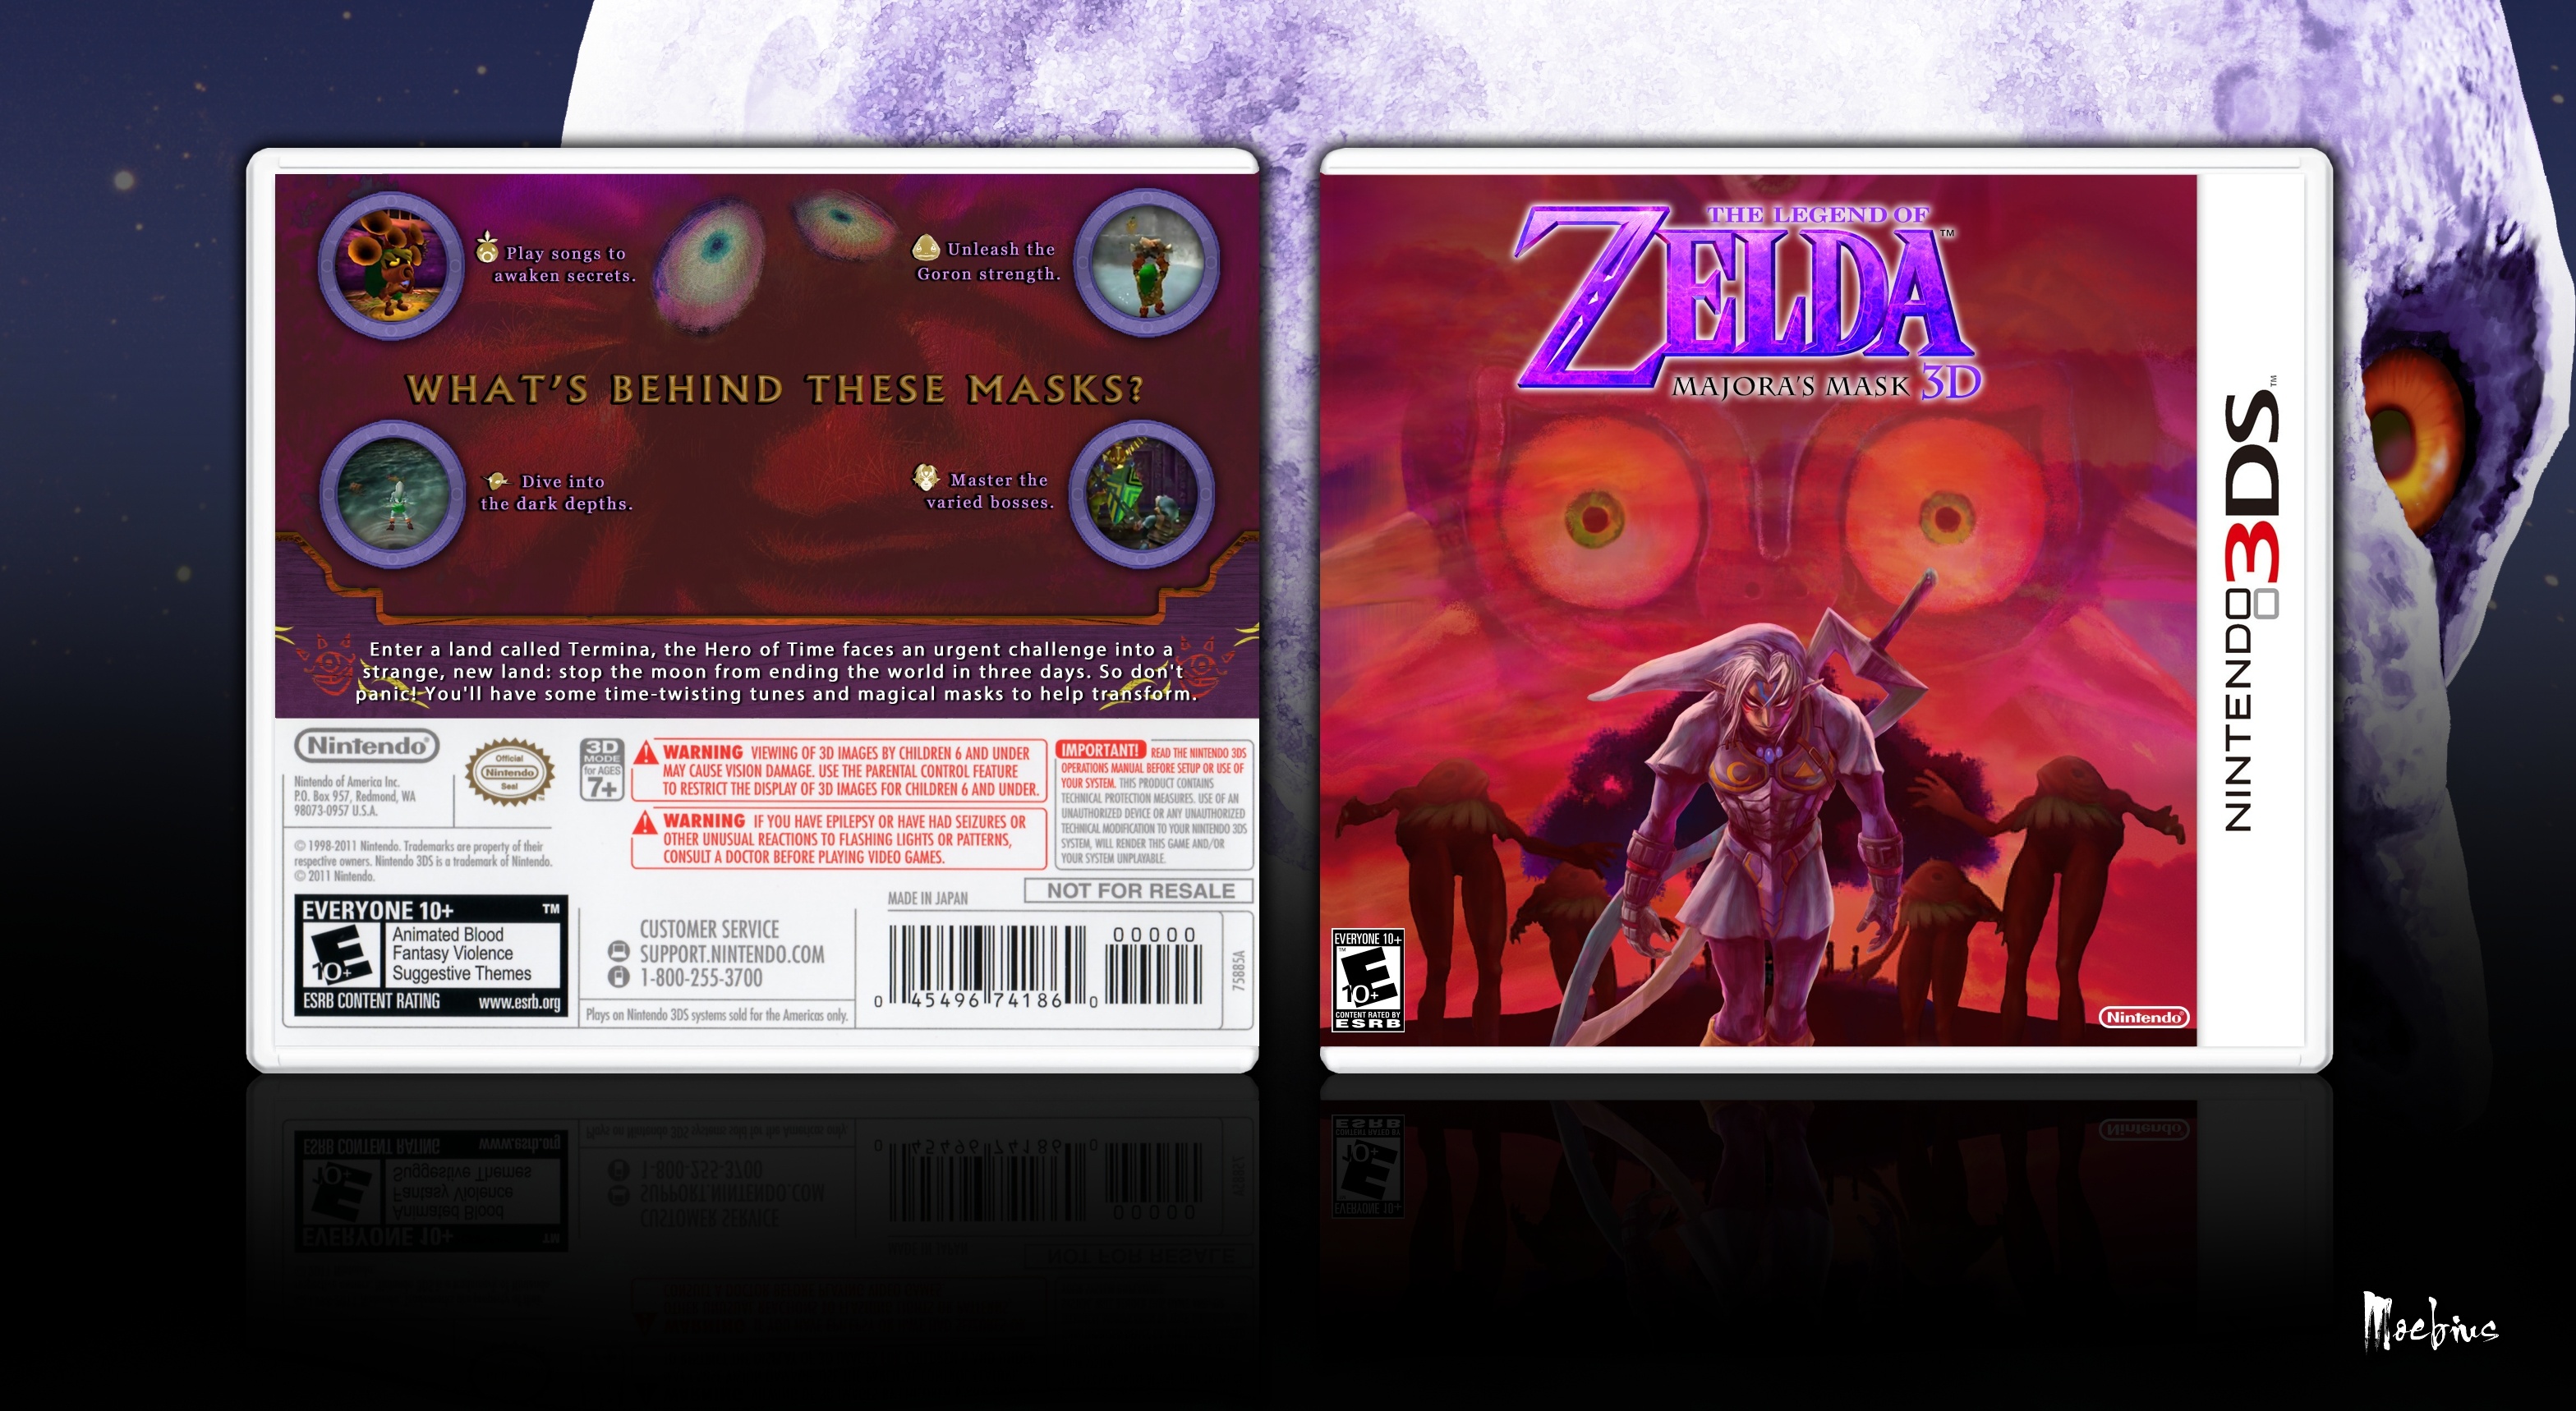 The Legend of Zelda: Majora's Mask 3D box cover